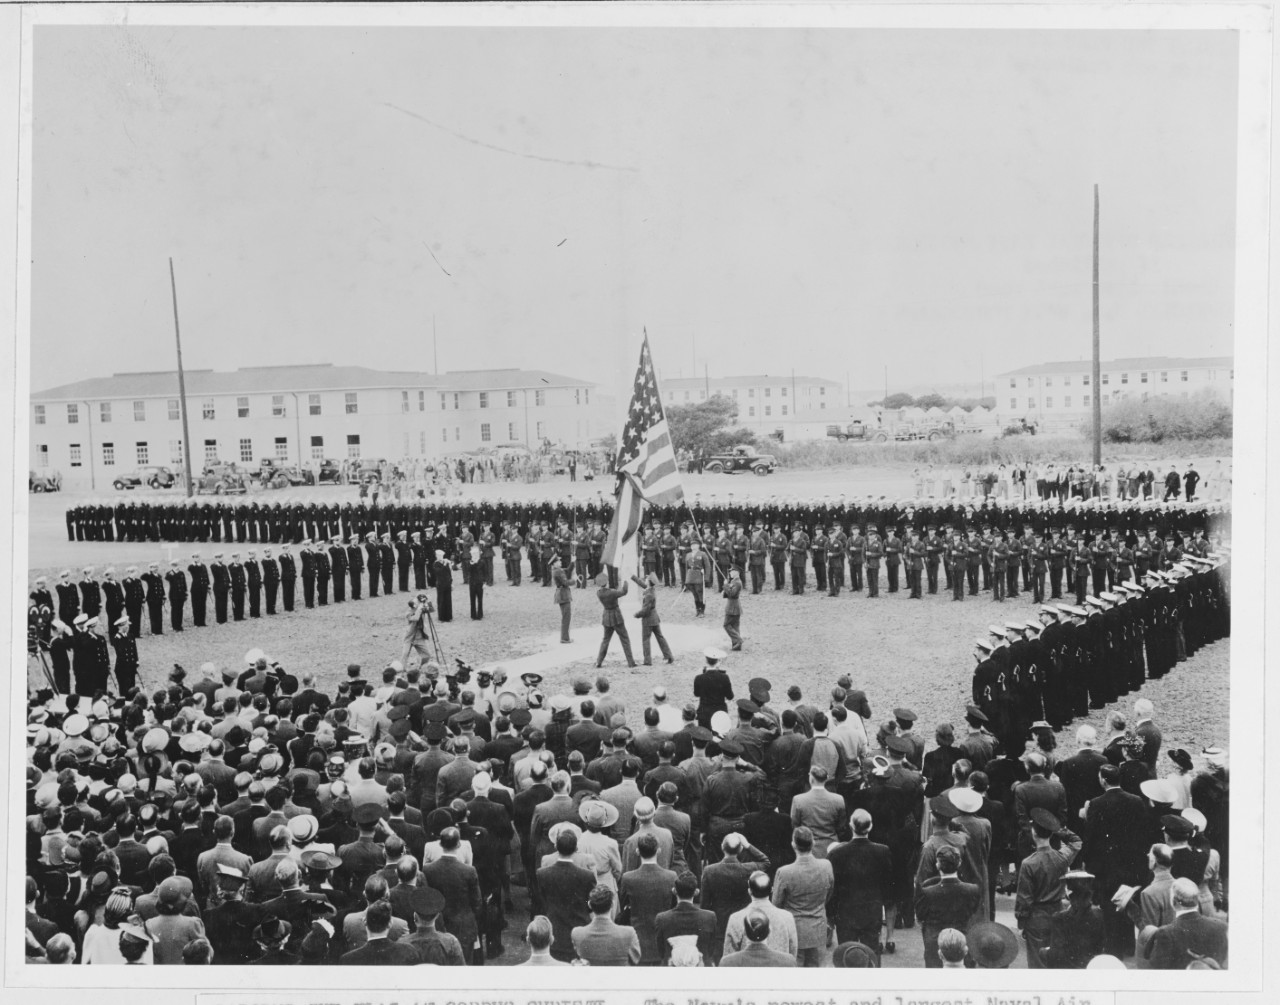 Raising the flag at Corpus Christi, Texas, Secretary of the Navy, Colonel Frank Knox